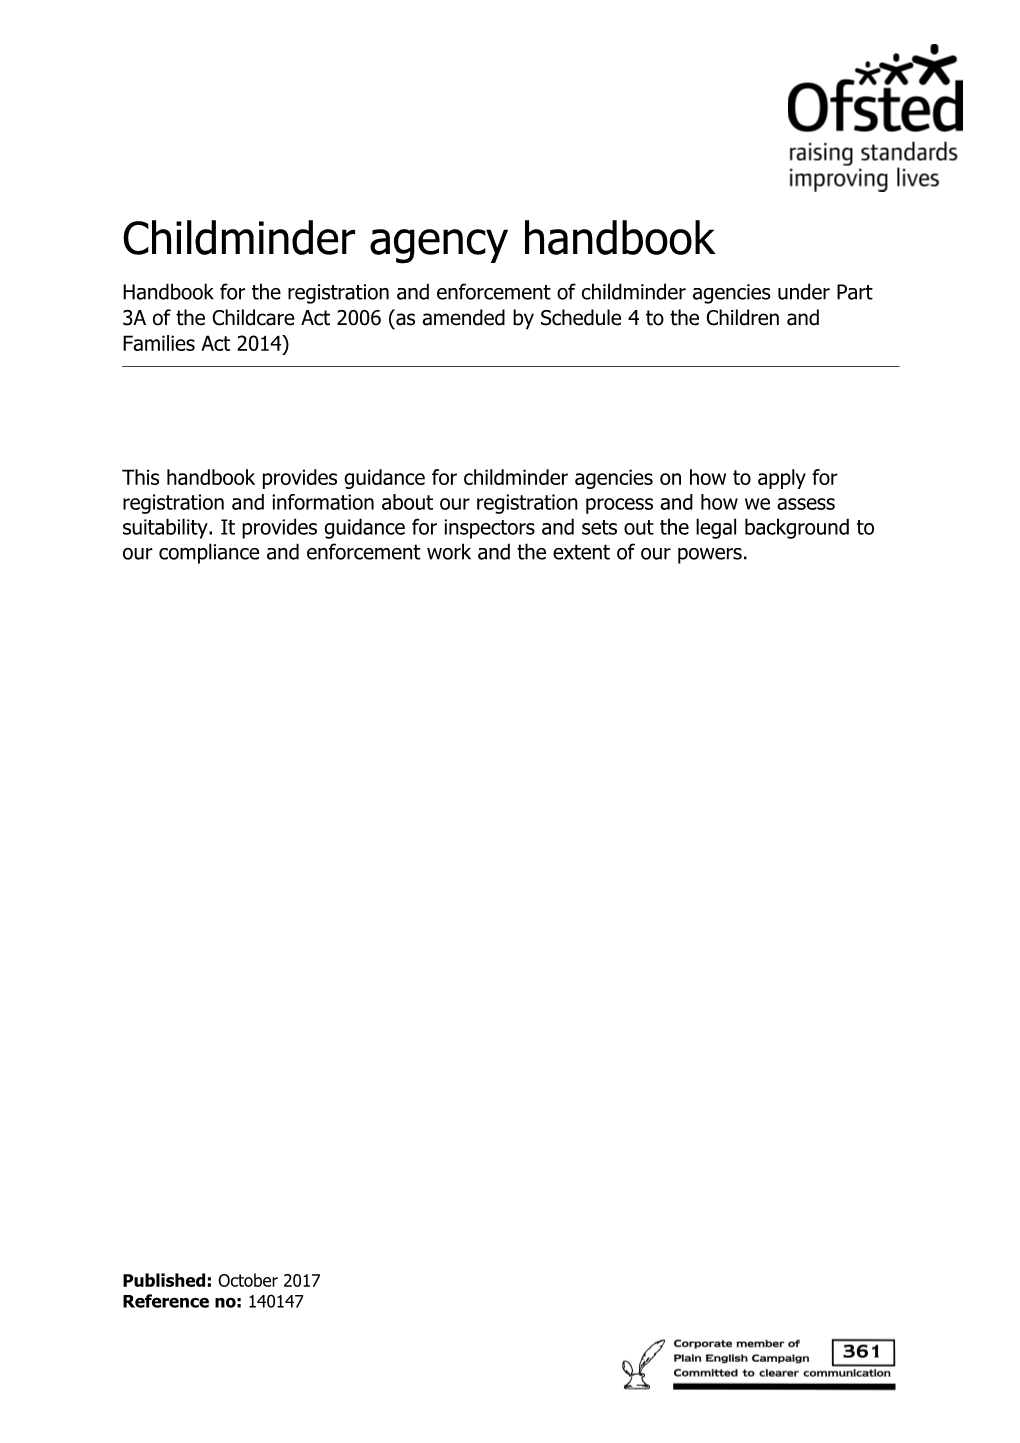 Childminder Agency Handbook